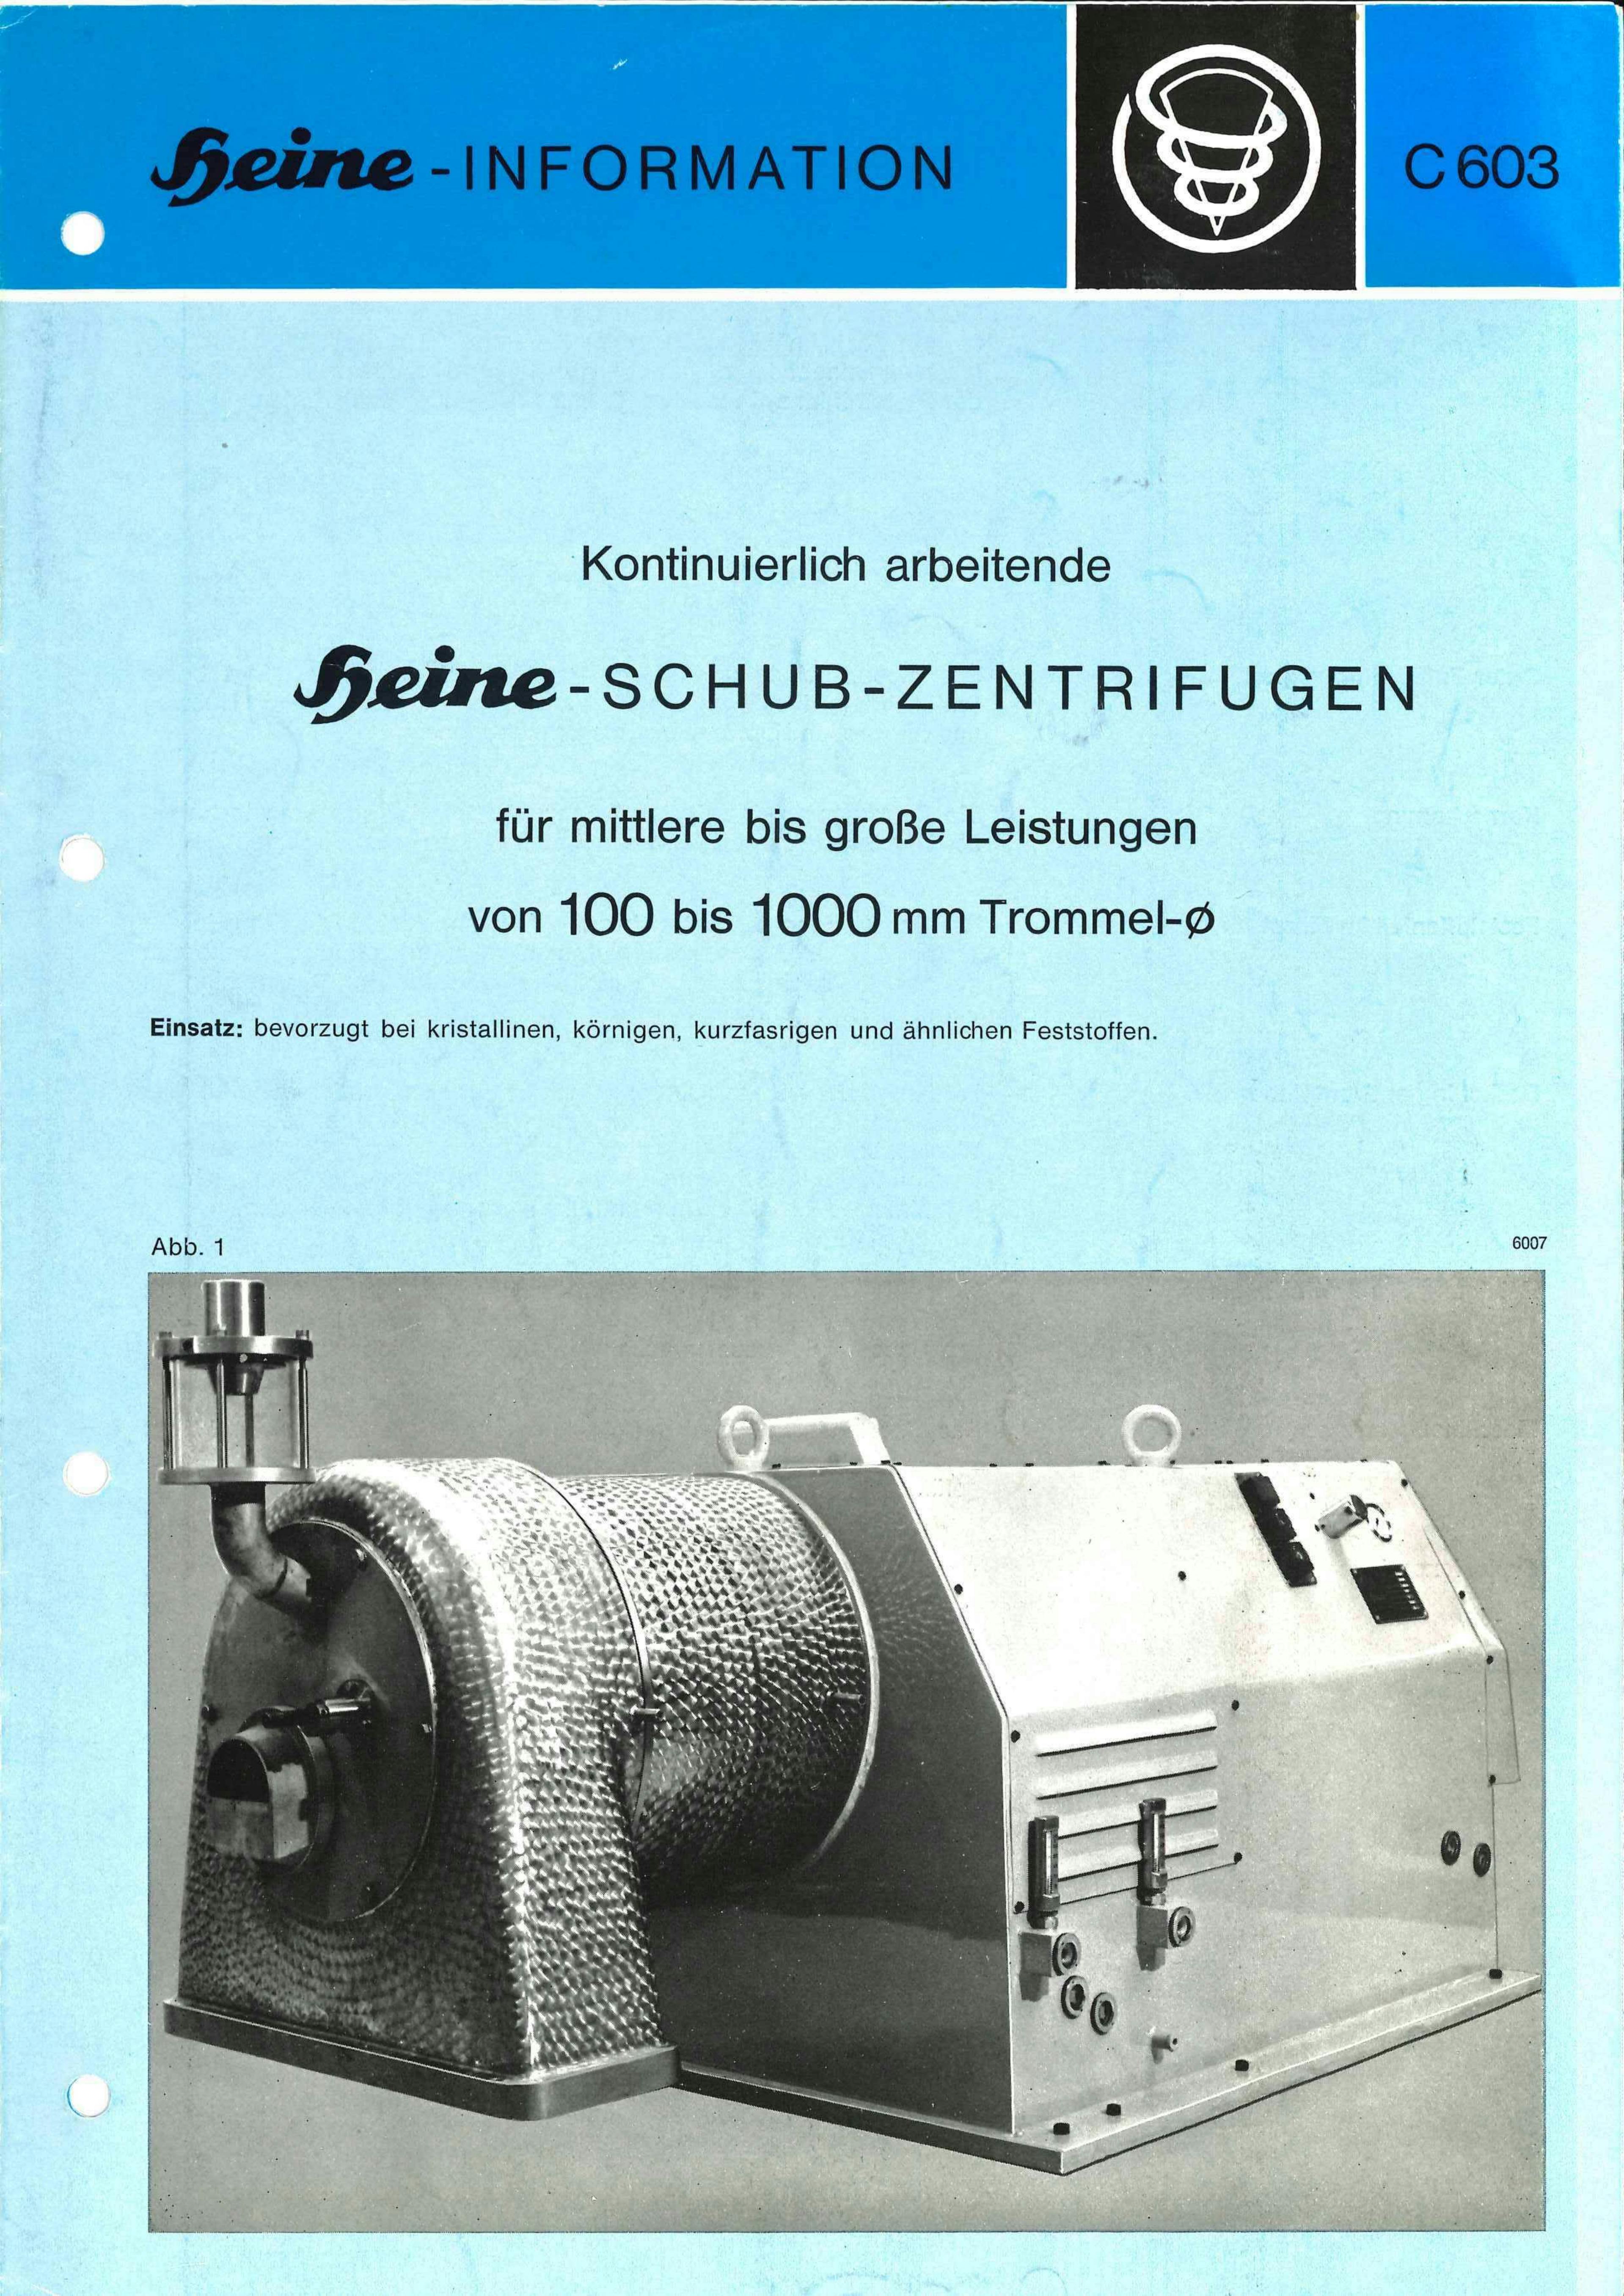 Heine Zentrifug 606 - Пульсирующая центрифуга - image 12